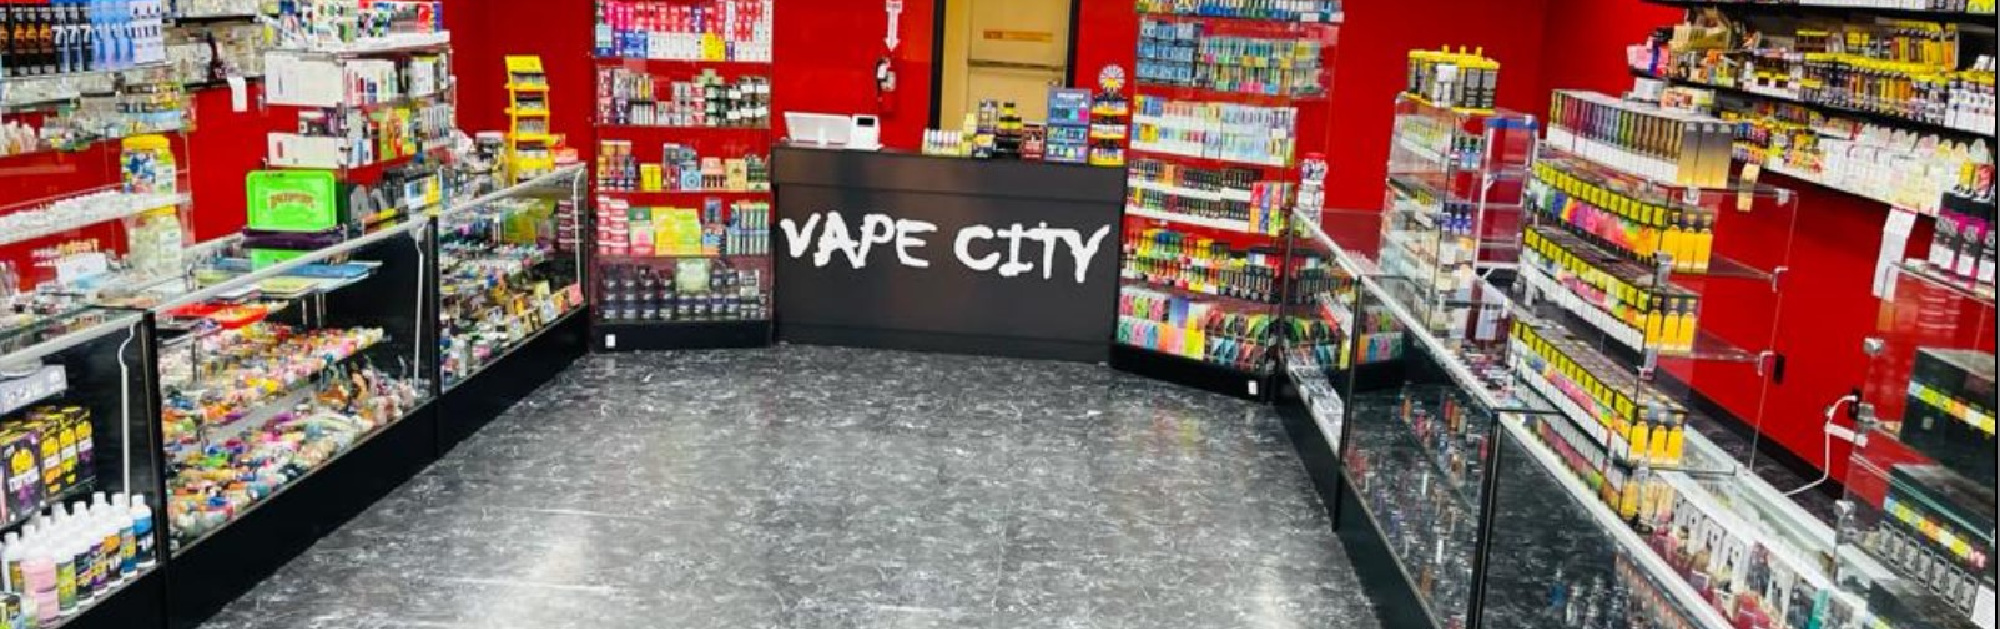 image of vape city smoke shop in laredo tx